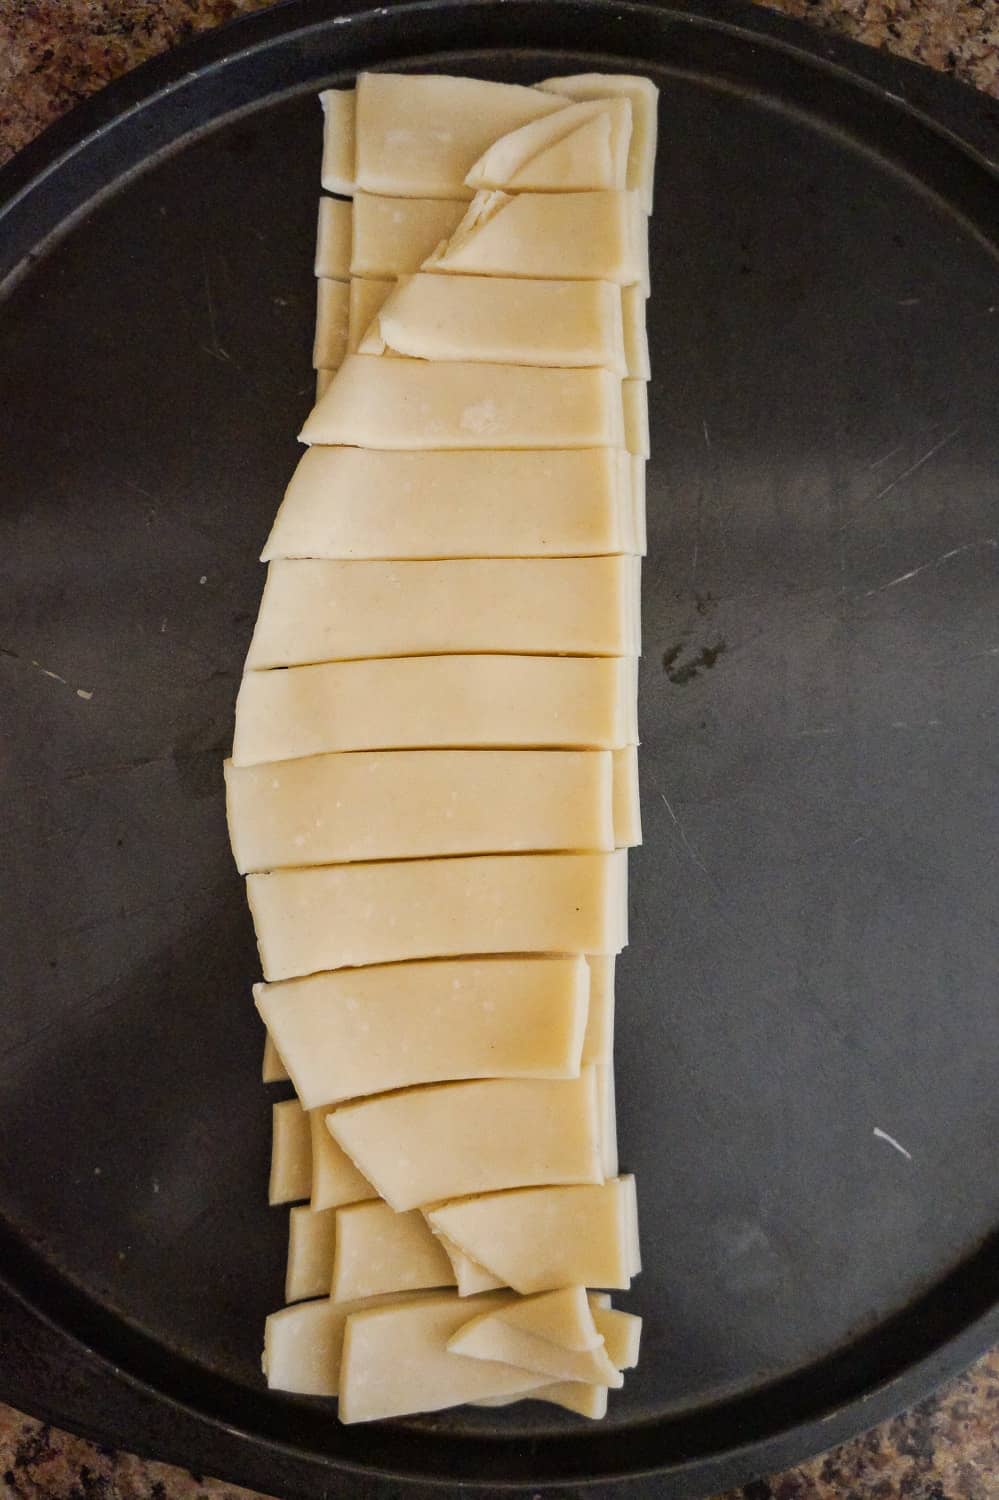 Pillsbury pie crust dough cut into strips